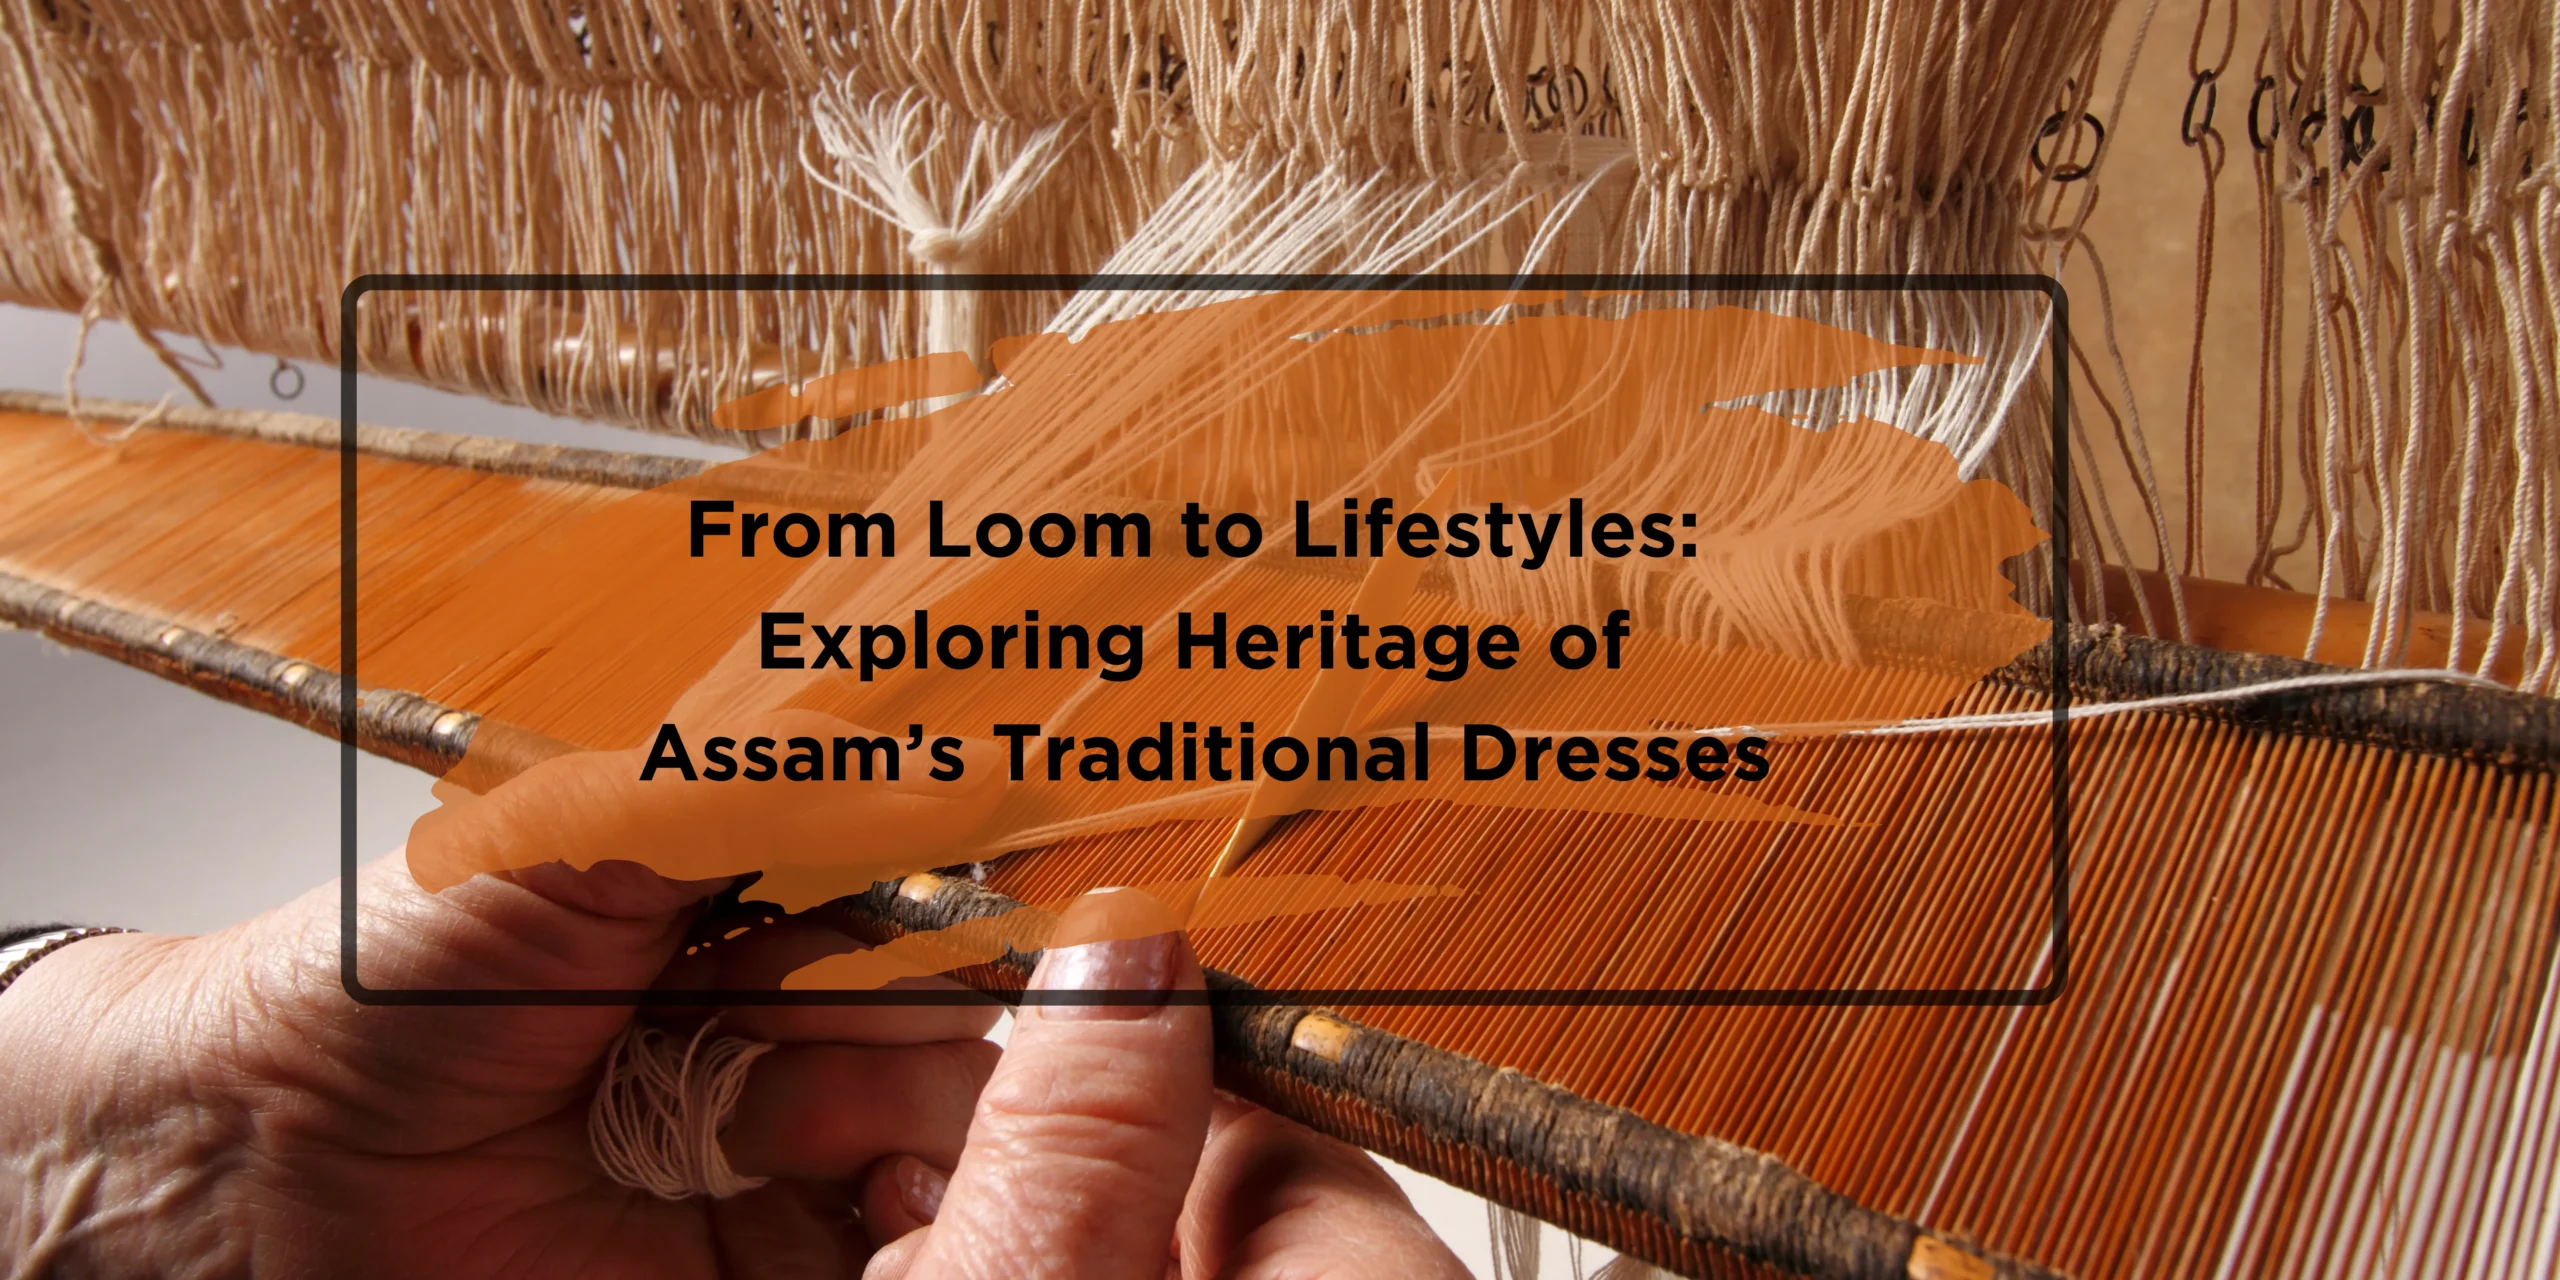 Assamese woman busy weaving Traditional handloom saree